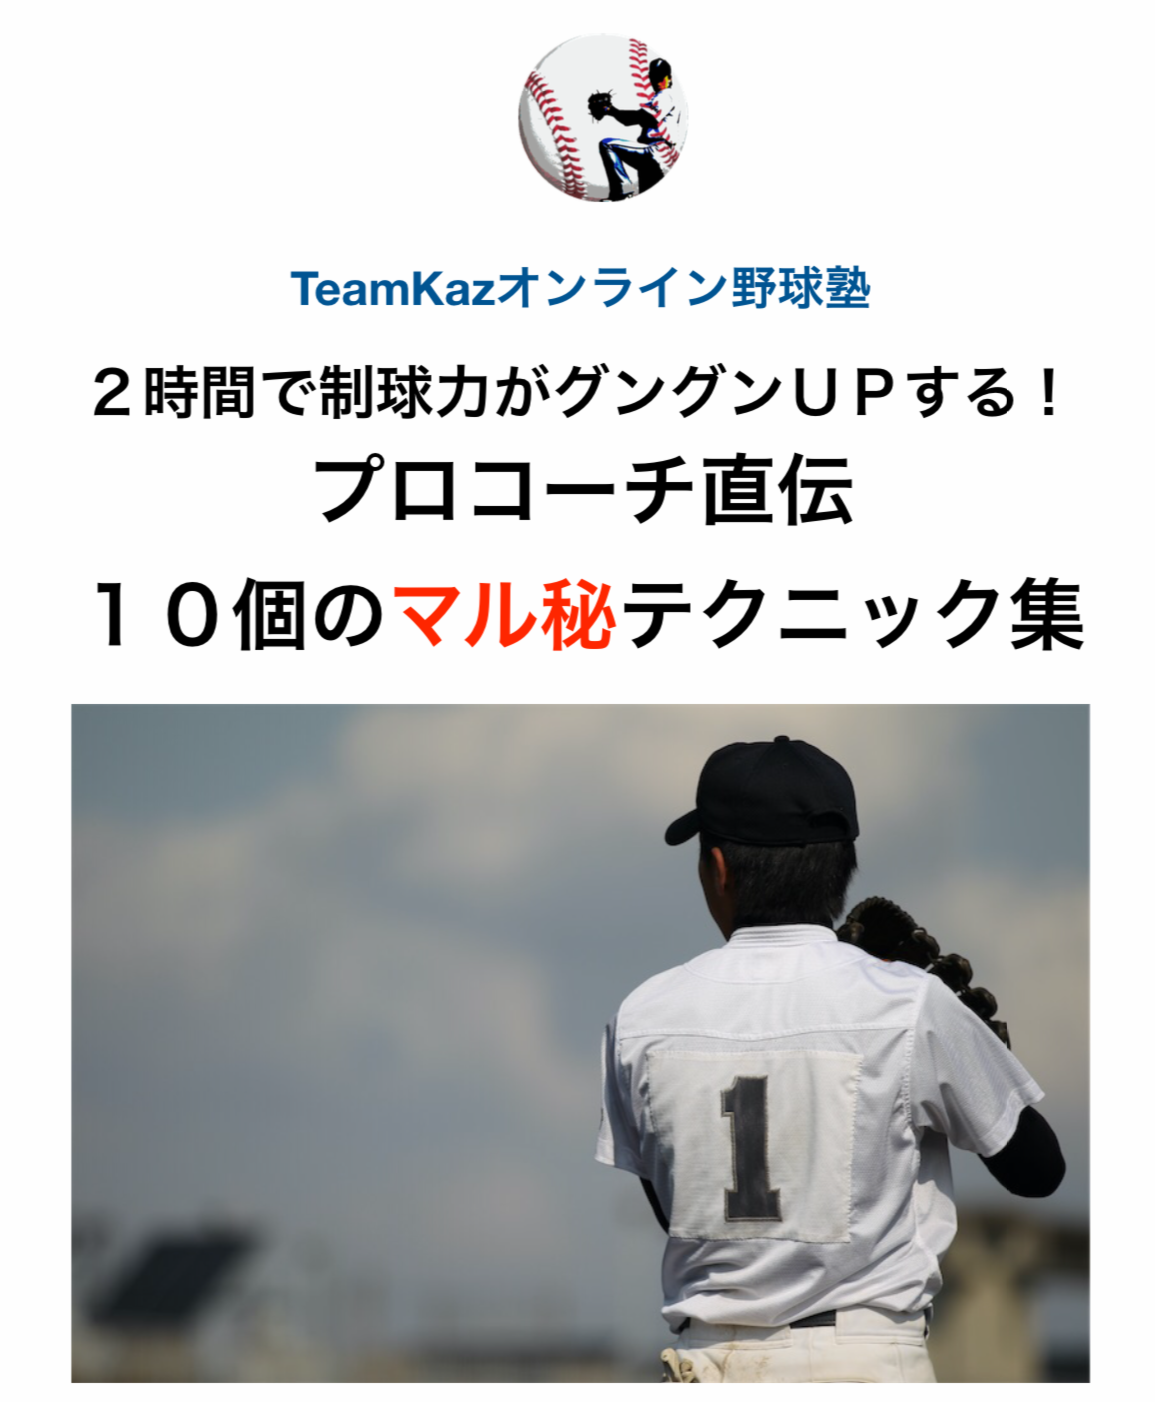 TeamKazオンライン野球塾